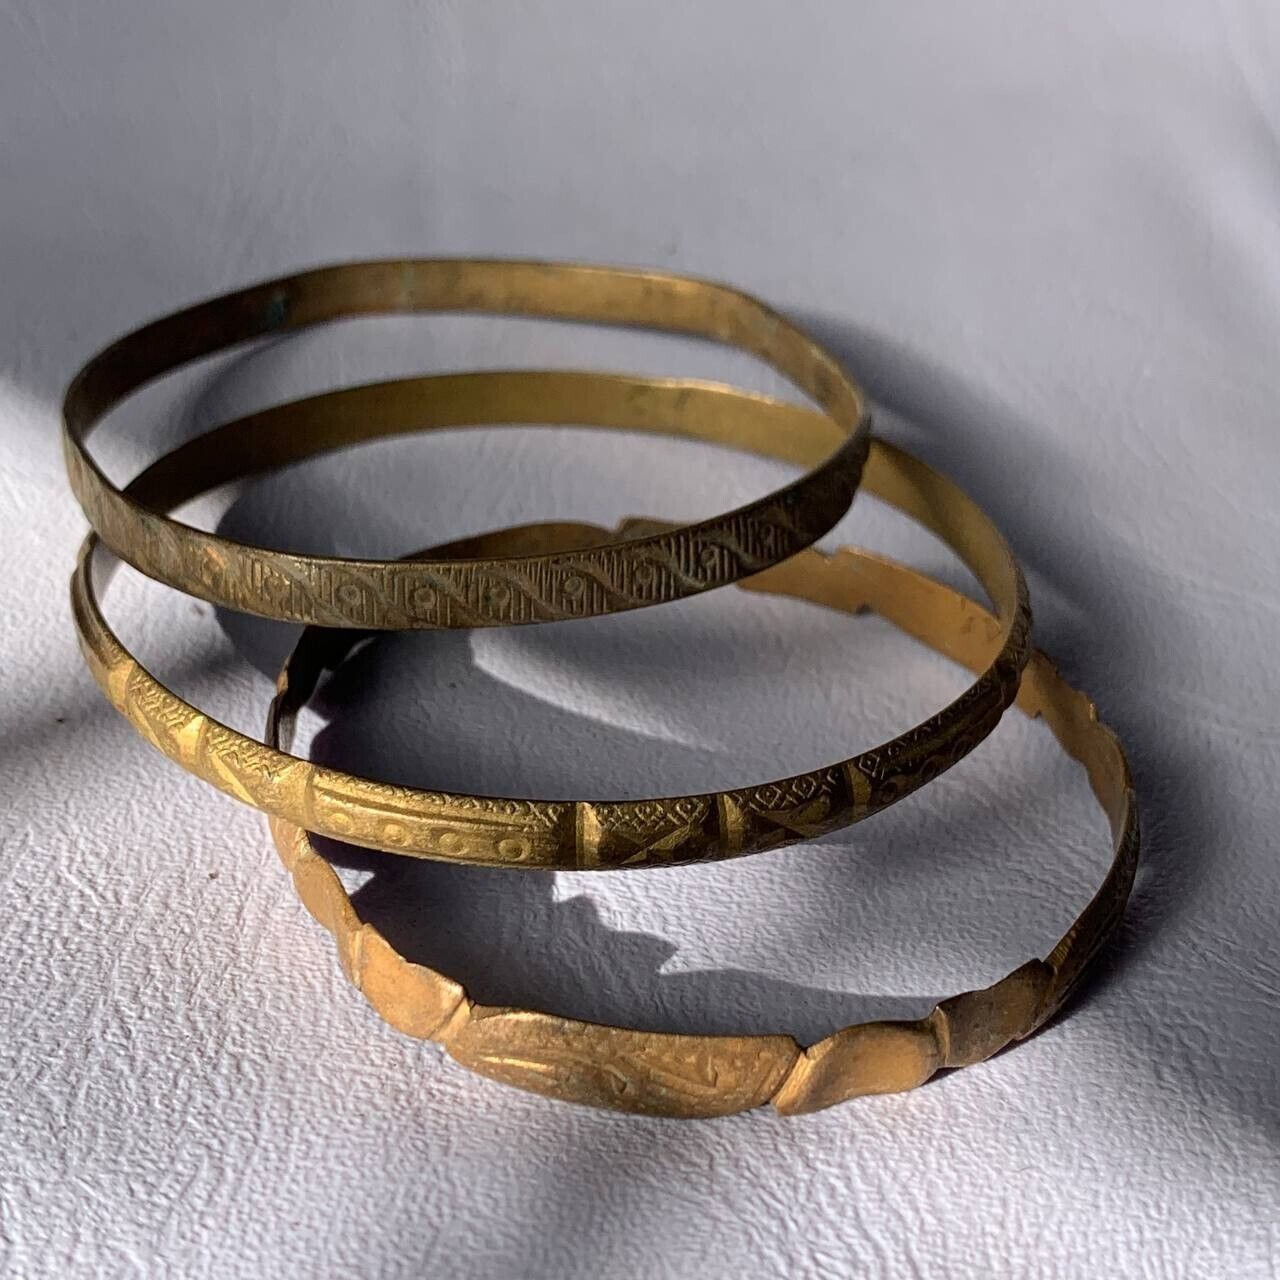 Lot of 3 Ancient Roman bronze bracelet bangles circa 100-400 AD